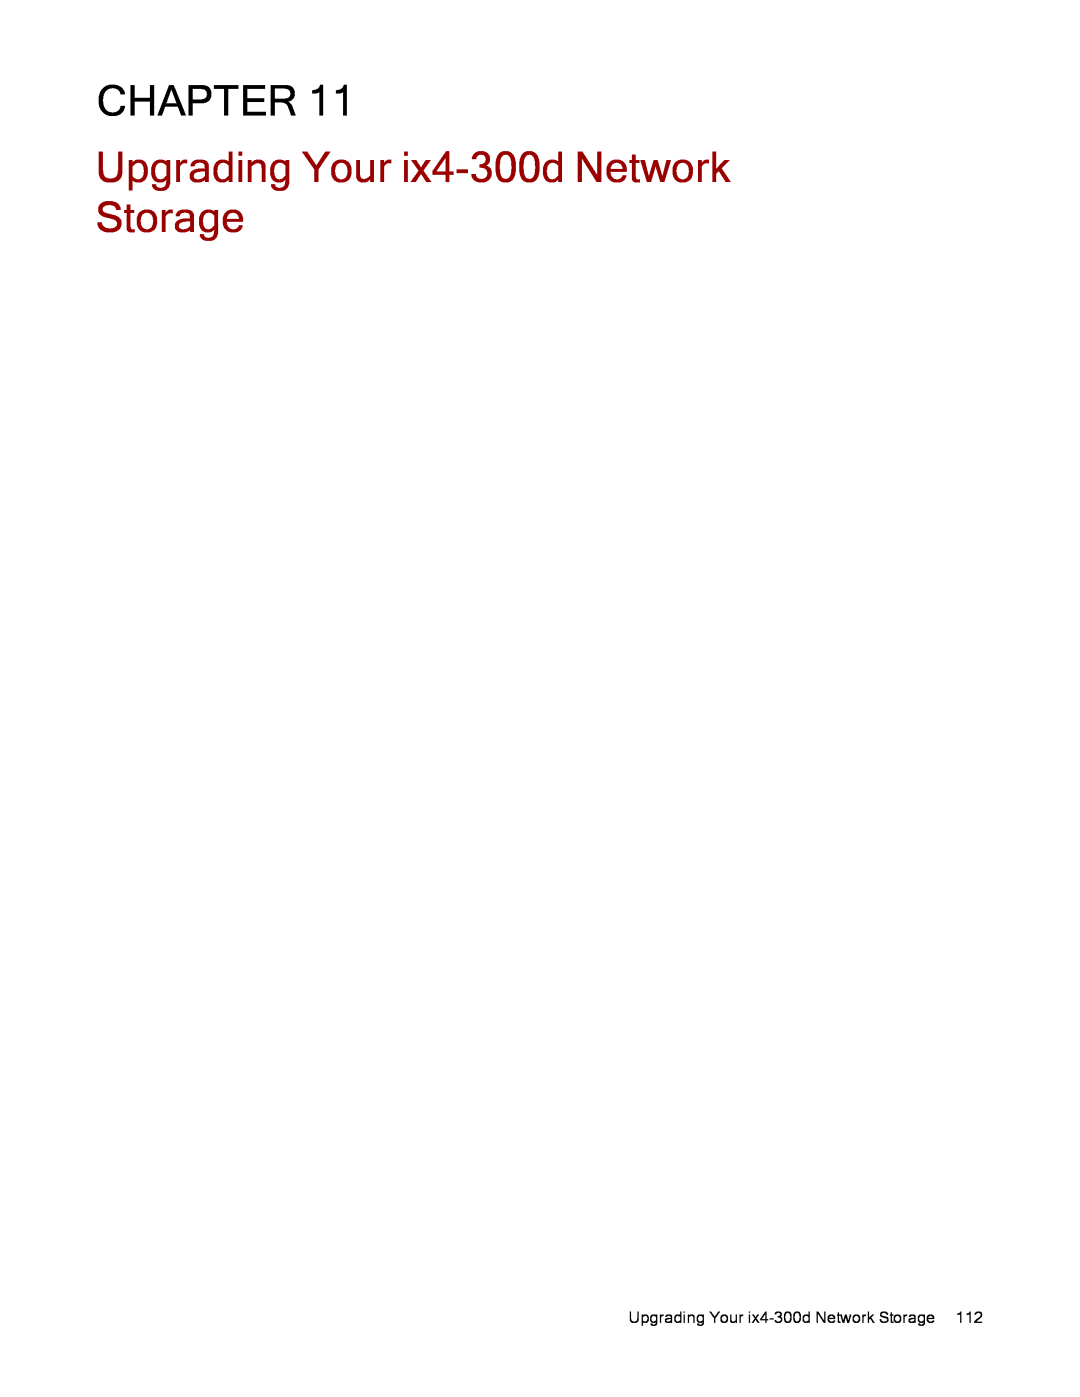 Lenovo 70B89000NA, 70B89003NA, 70B89001NA manual Upgrading Your ix4-300d Network Storage, Chapter 